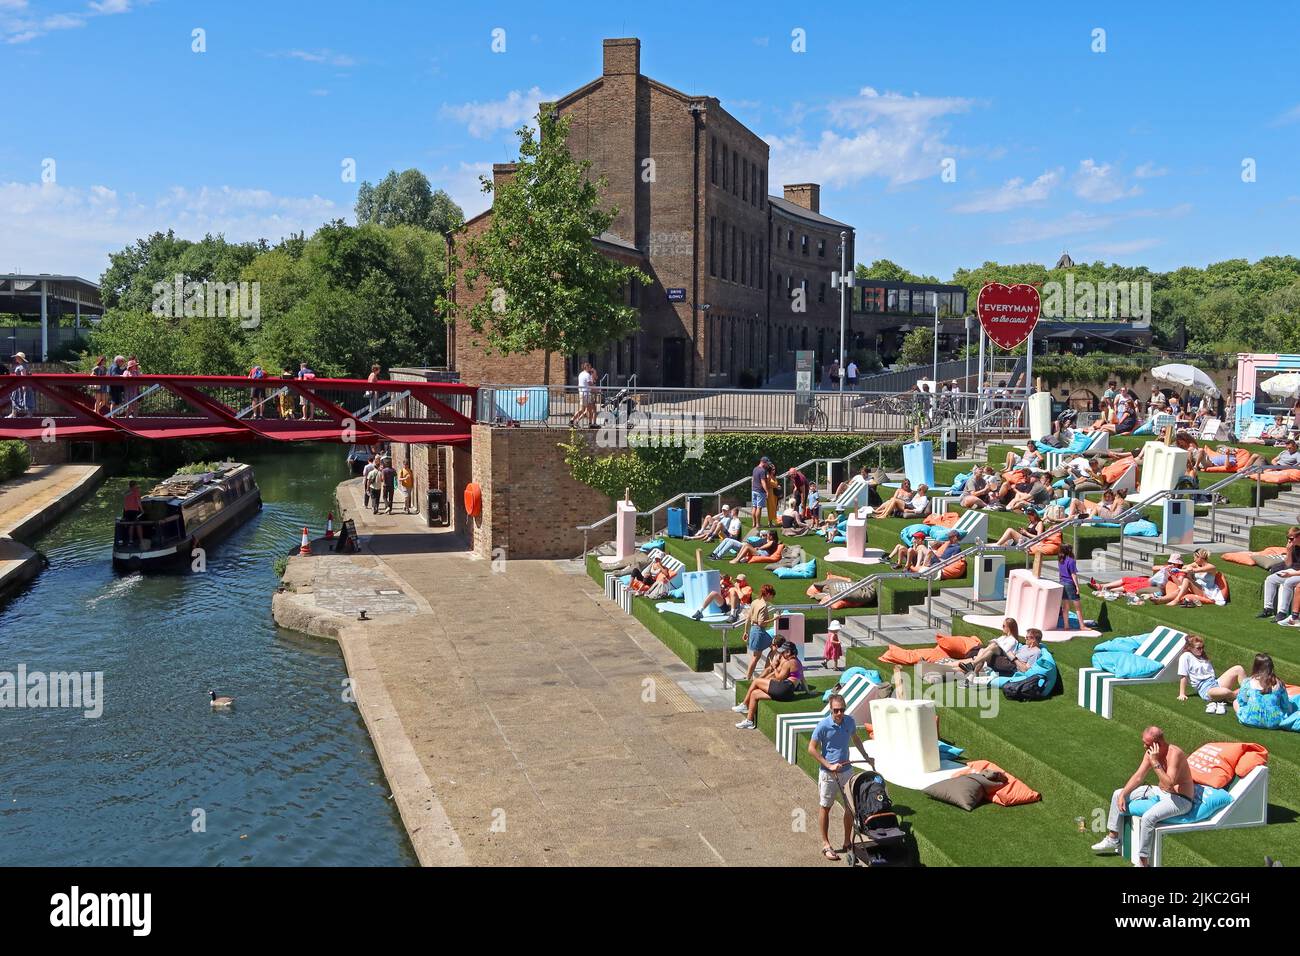 Everyman on the Canal, Granary Square, Coal Drops Yard , Kings Cross, London, England, UK, N1C 4AB Stockfoto